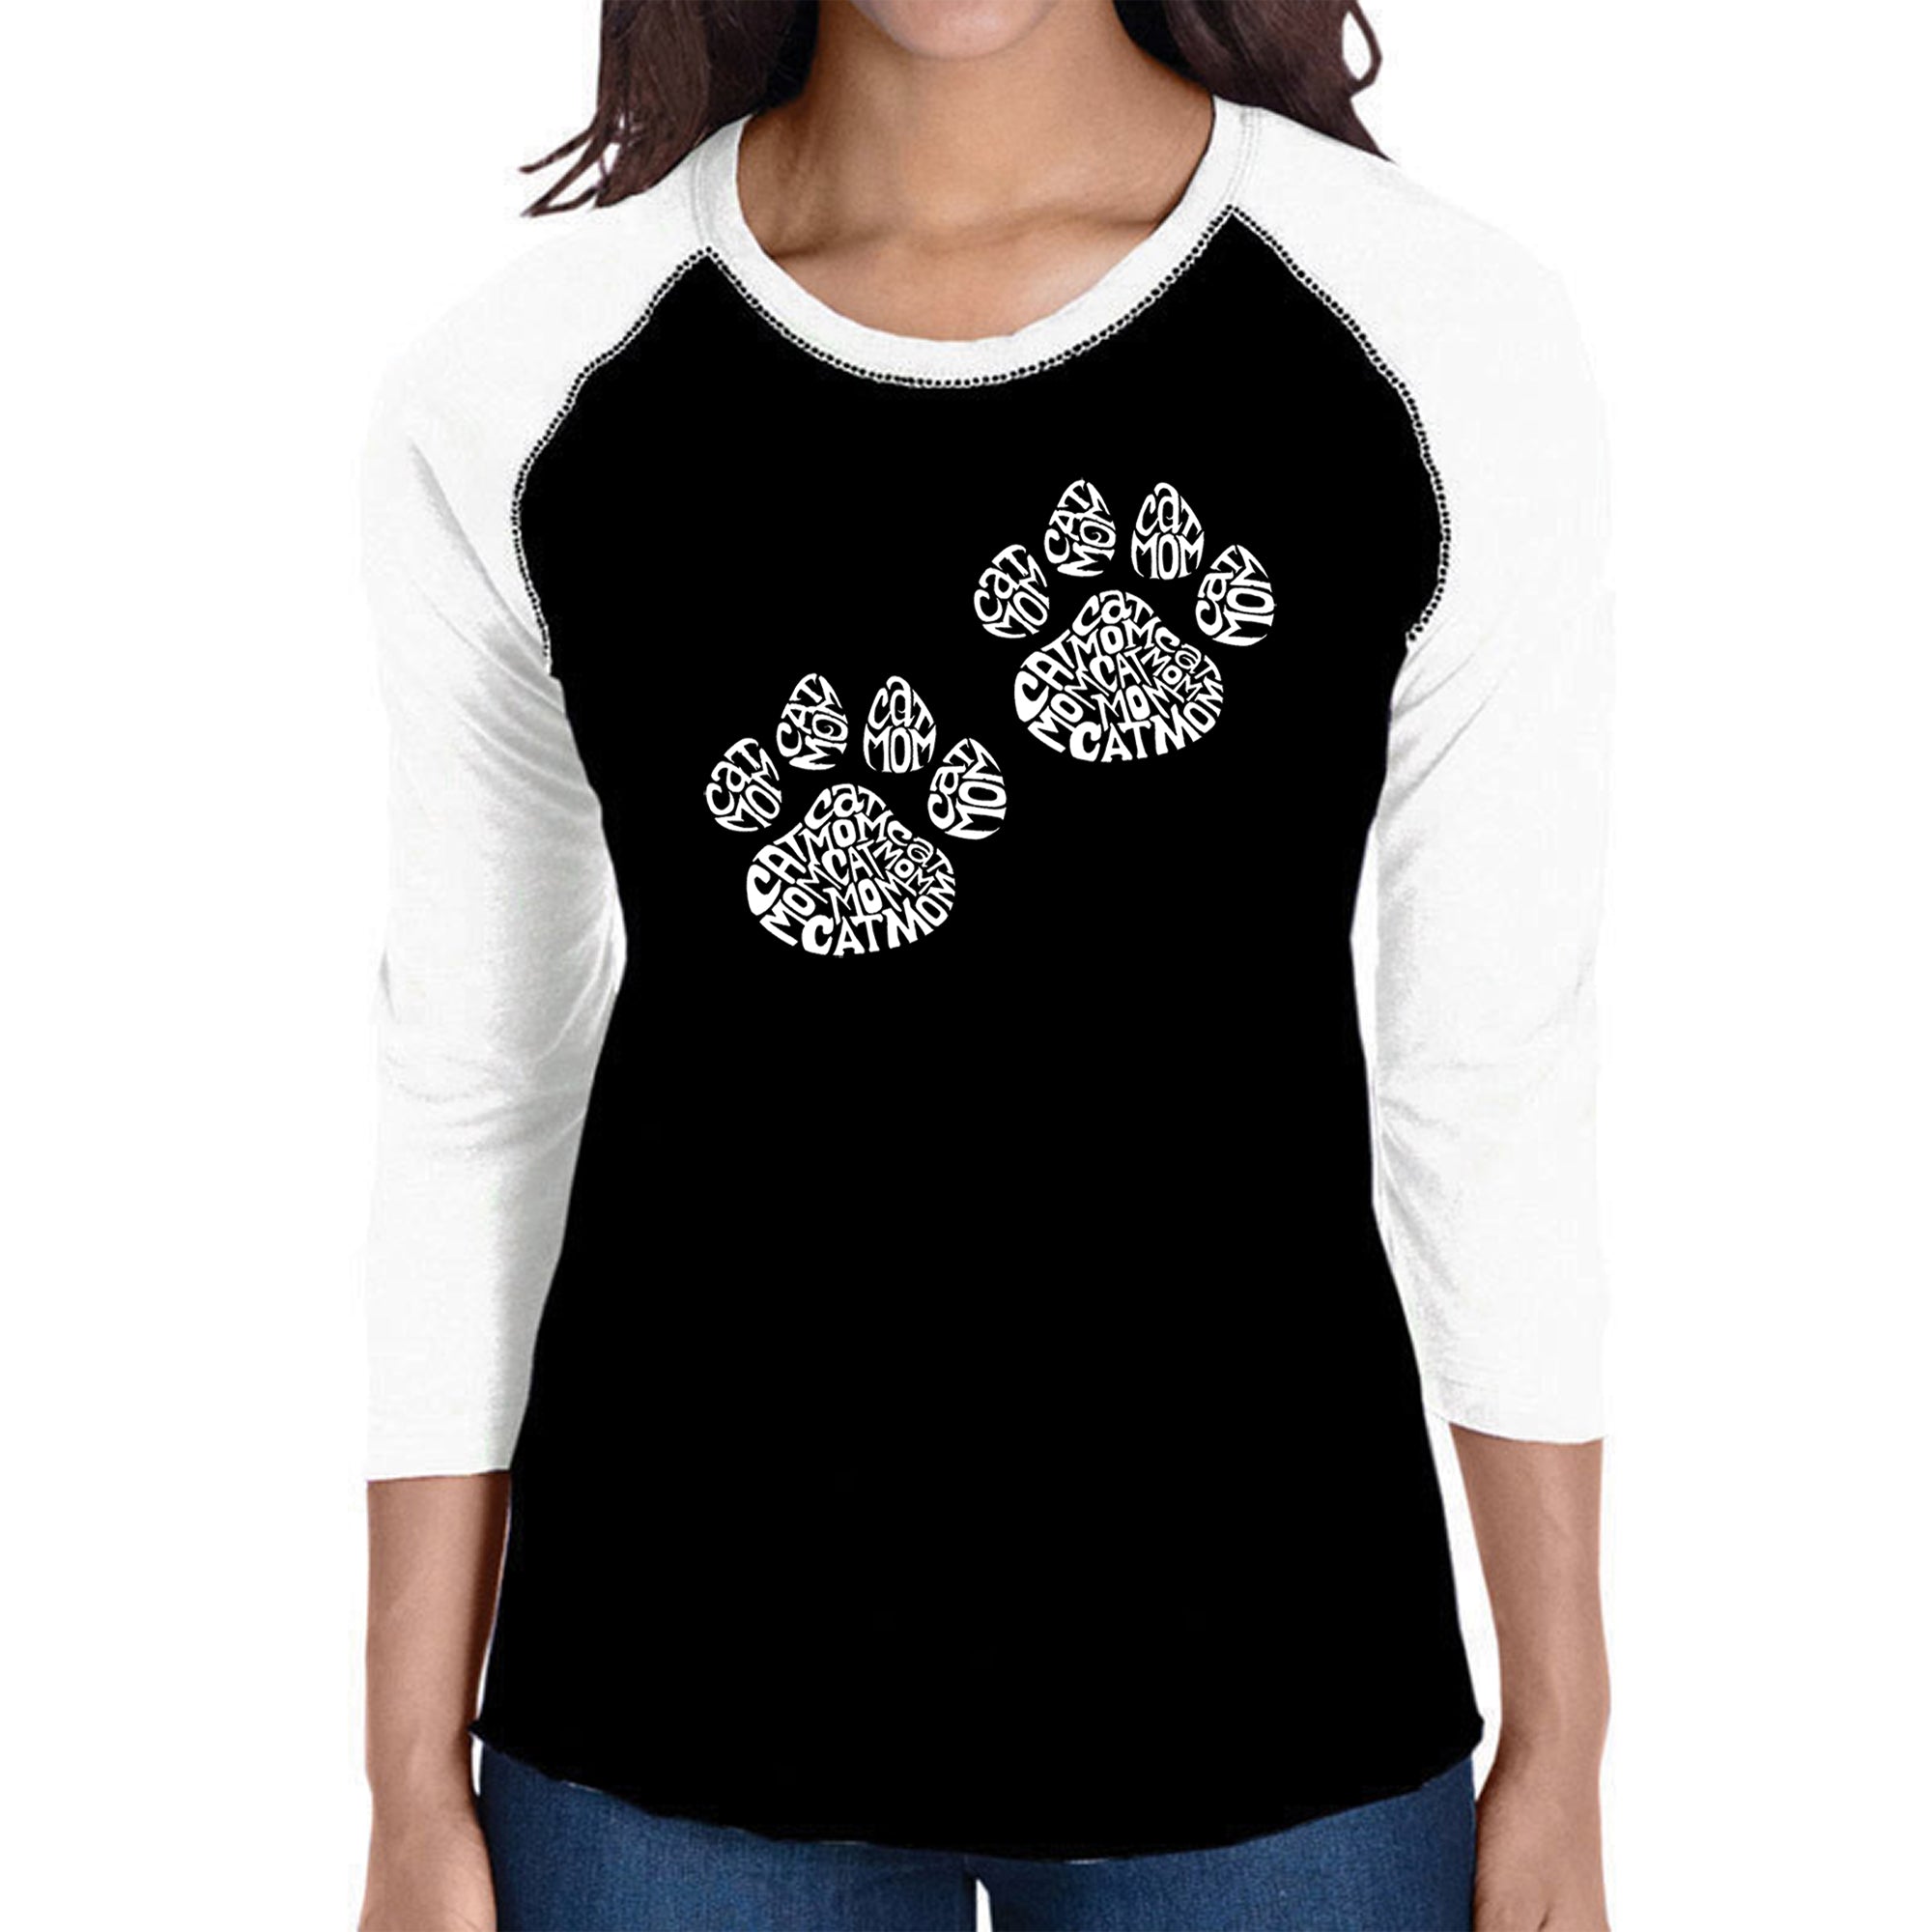 Cat Mom - Women's Raglan Baseball Word Art T-Shirt - Black/White - Small